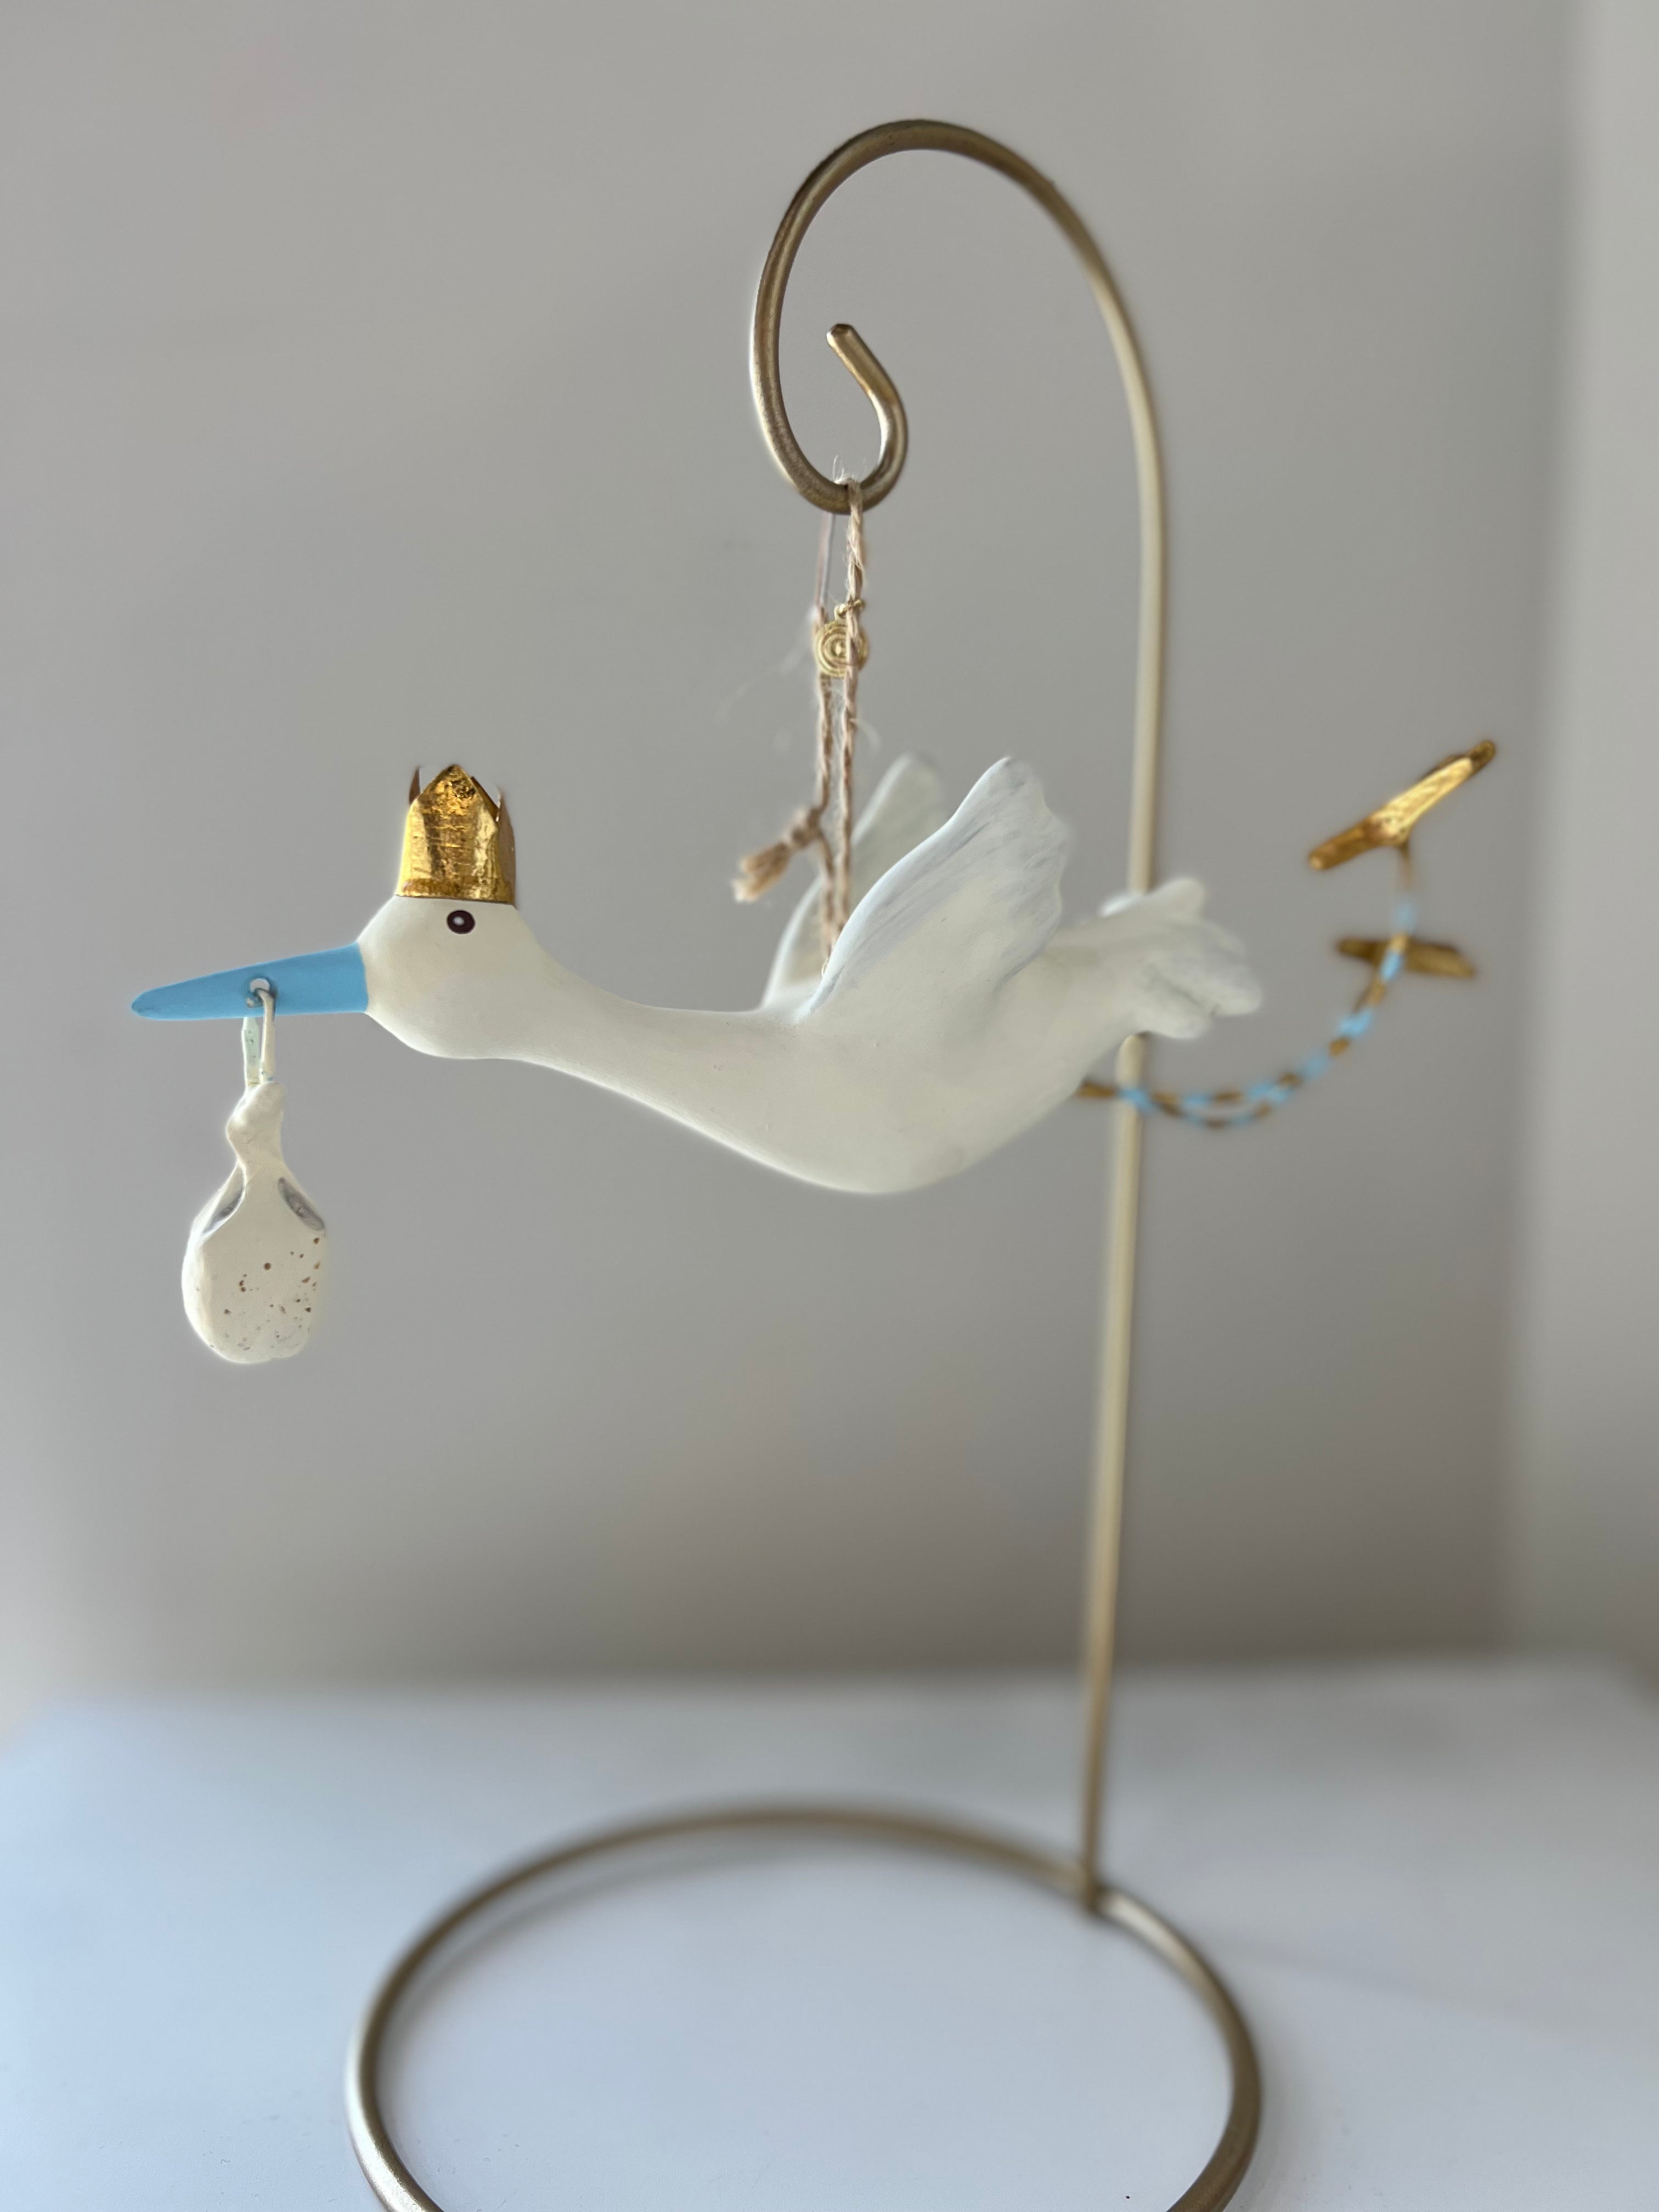 Royal Stork Ornament